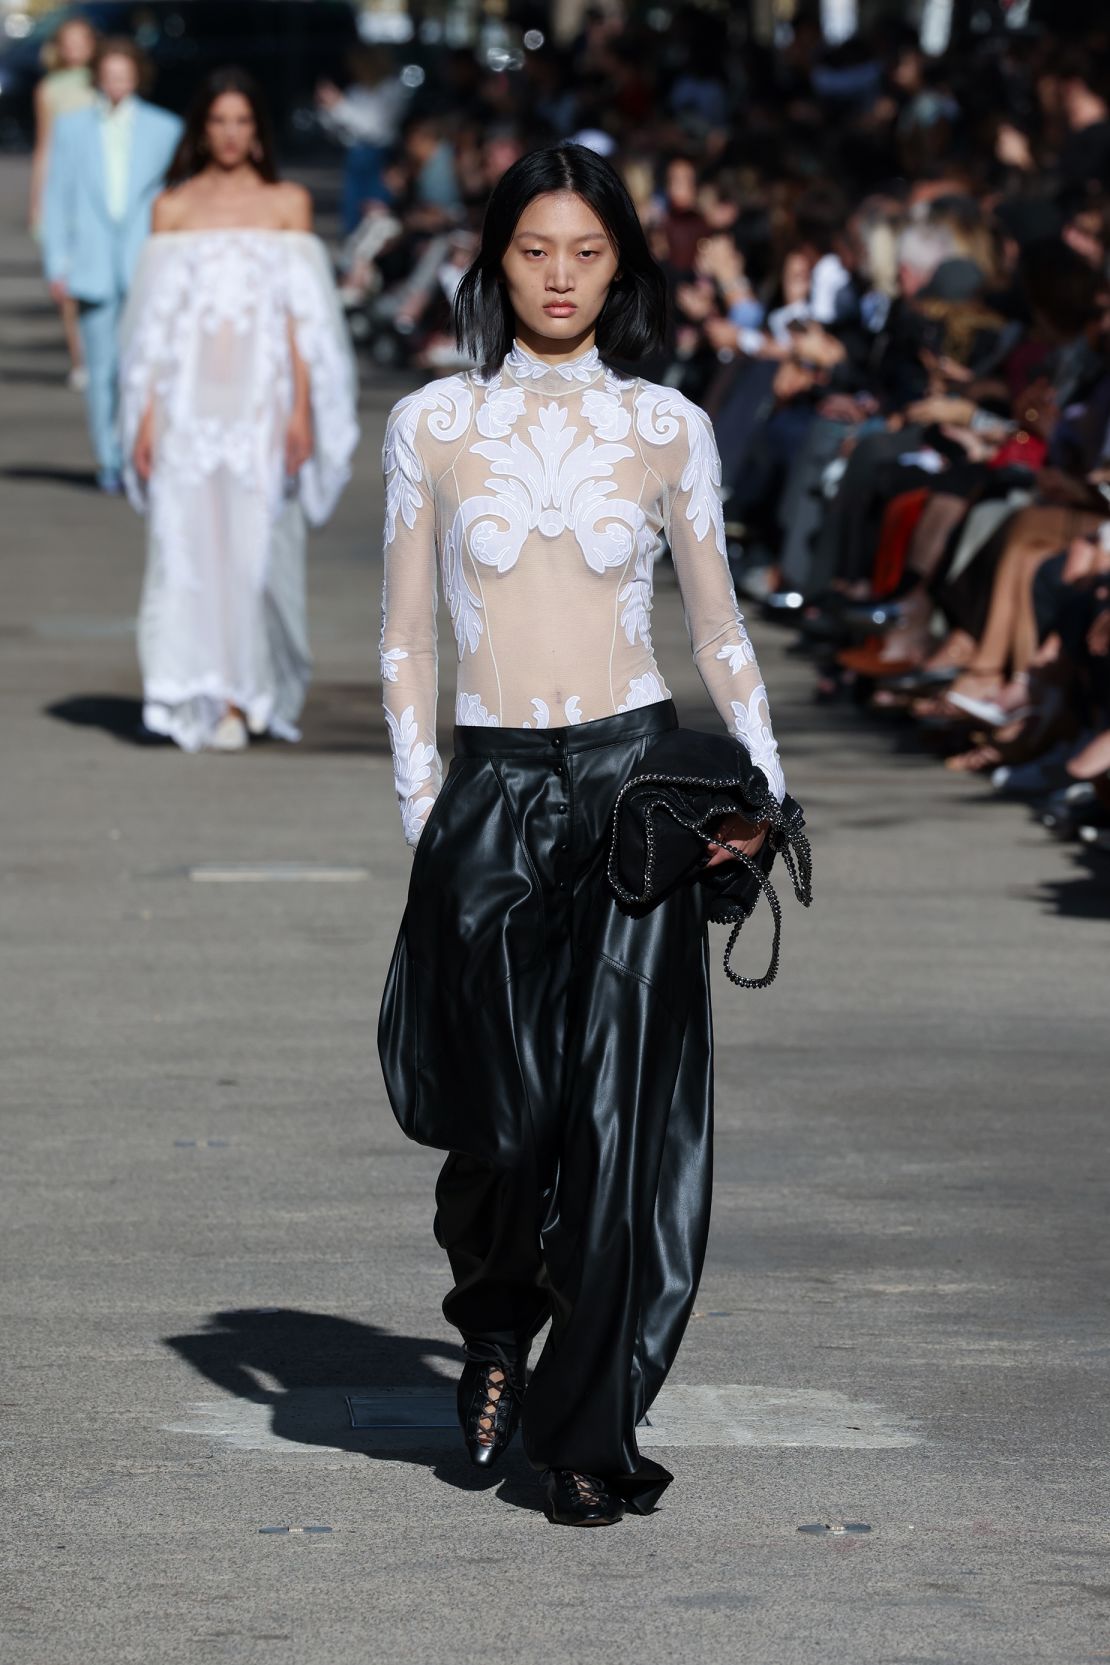 A model walks the runway for Stella McCartney at Paris Fashion Week.